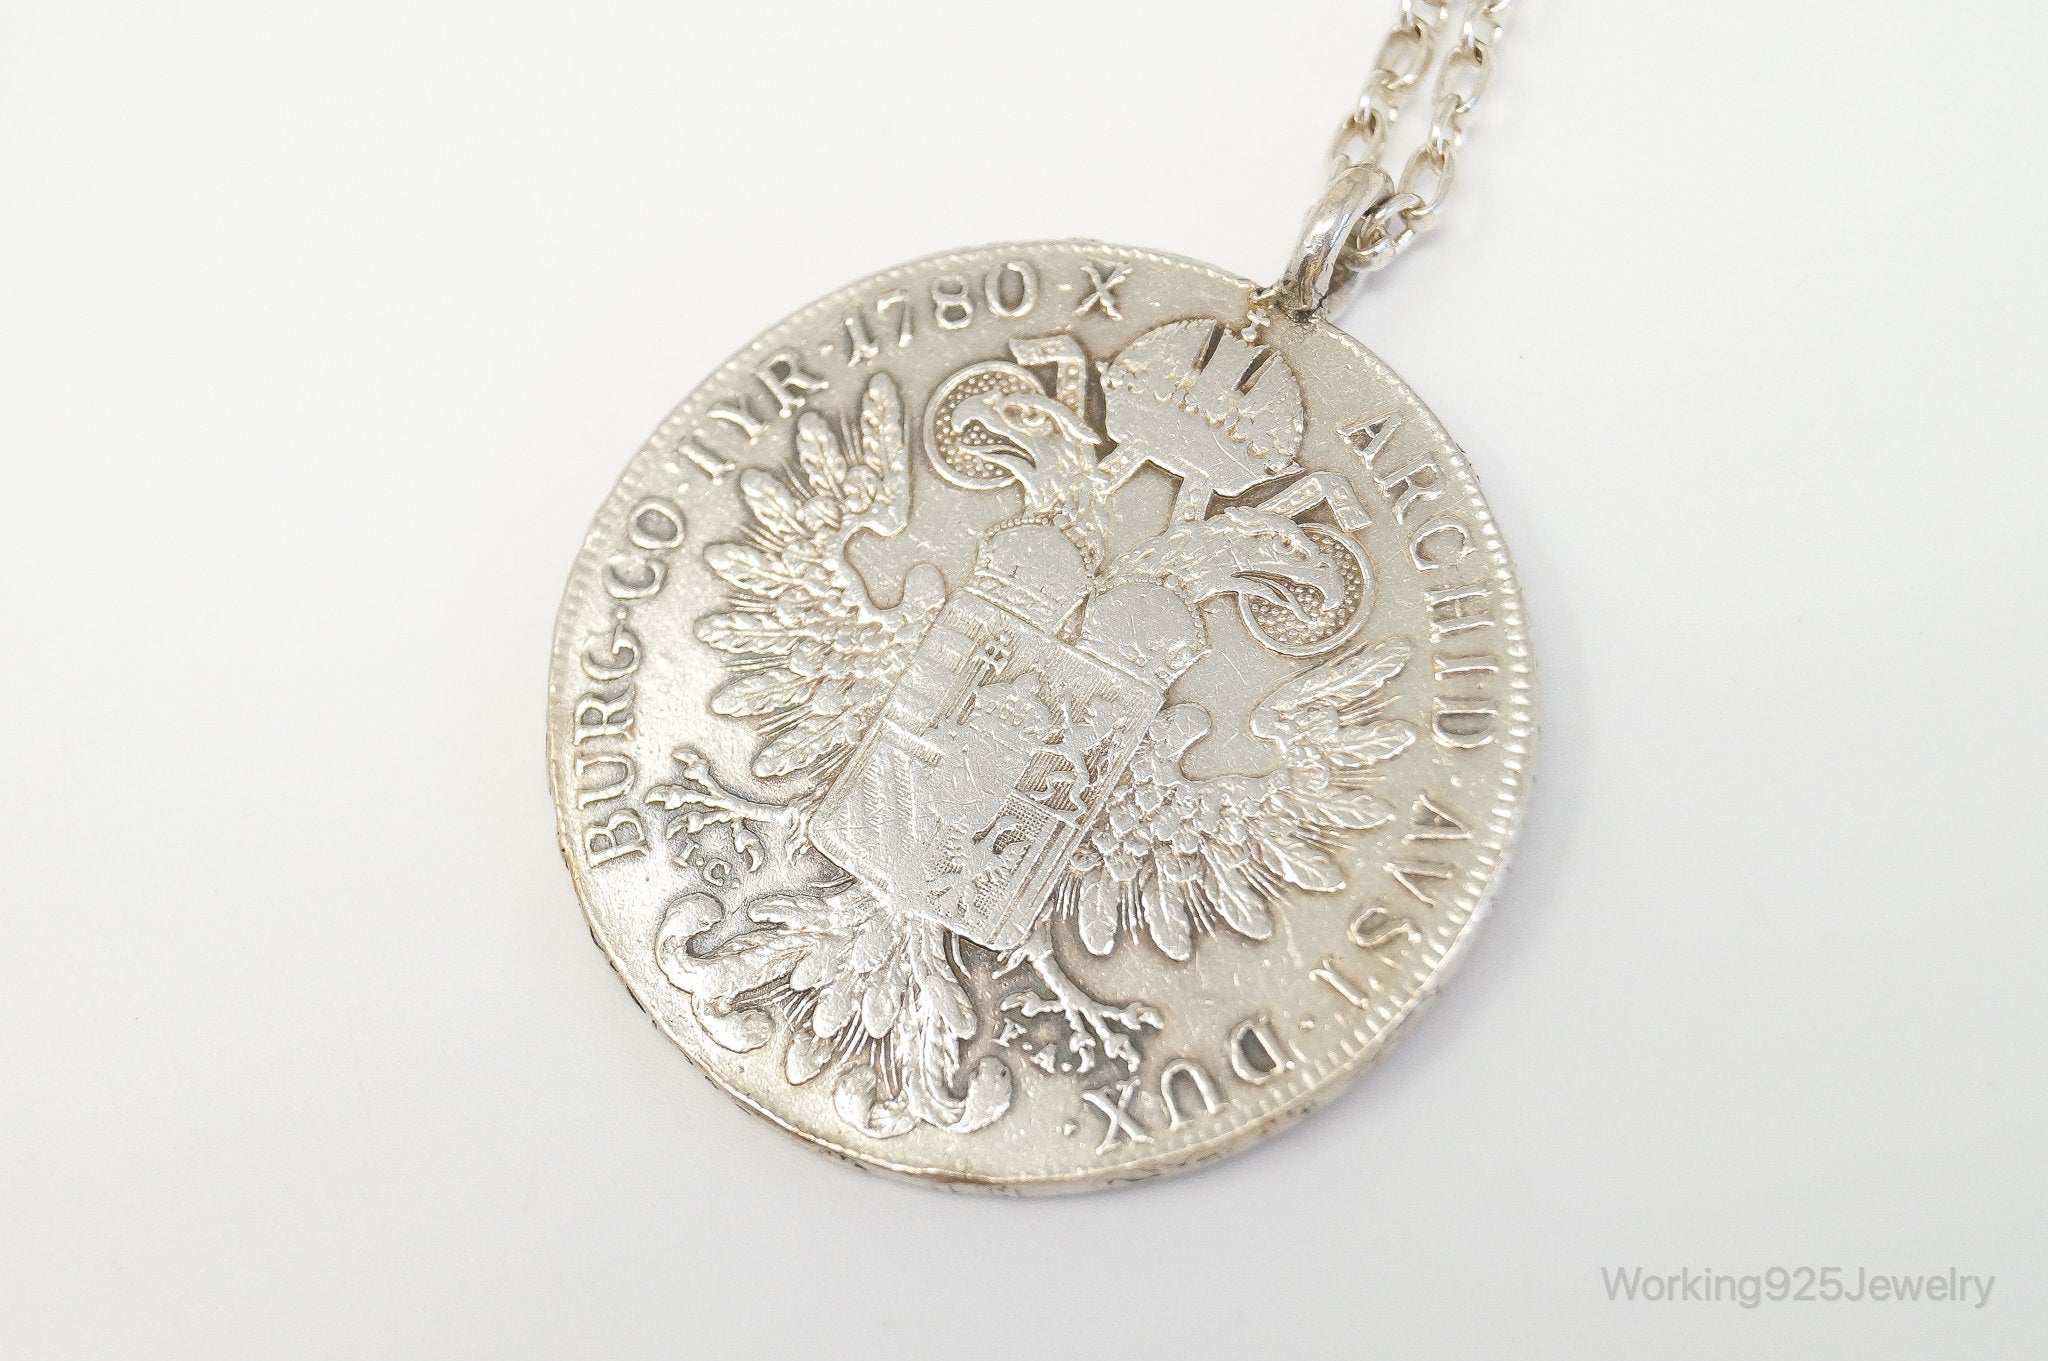 Antique 1780 M. Theresia Austrian Silver Thaler Coin Necklace